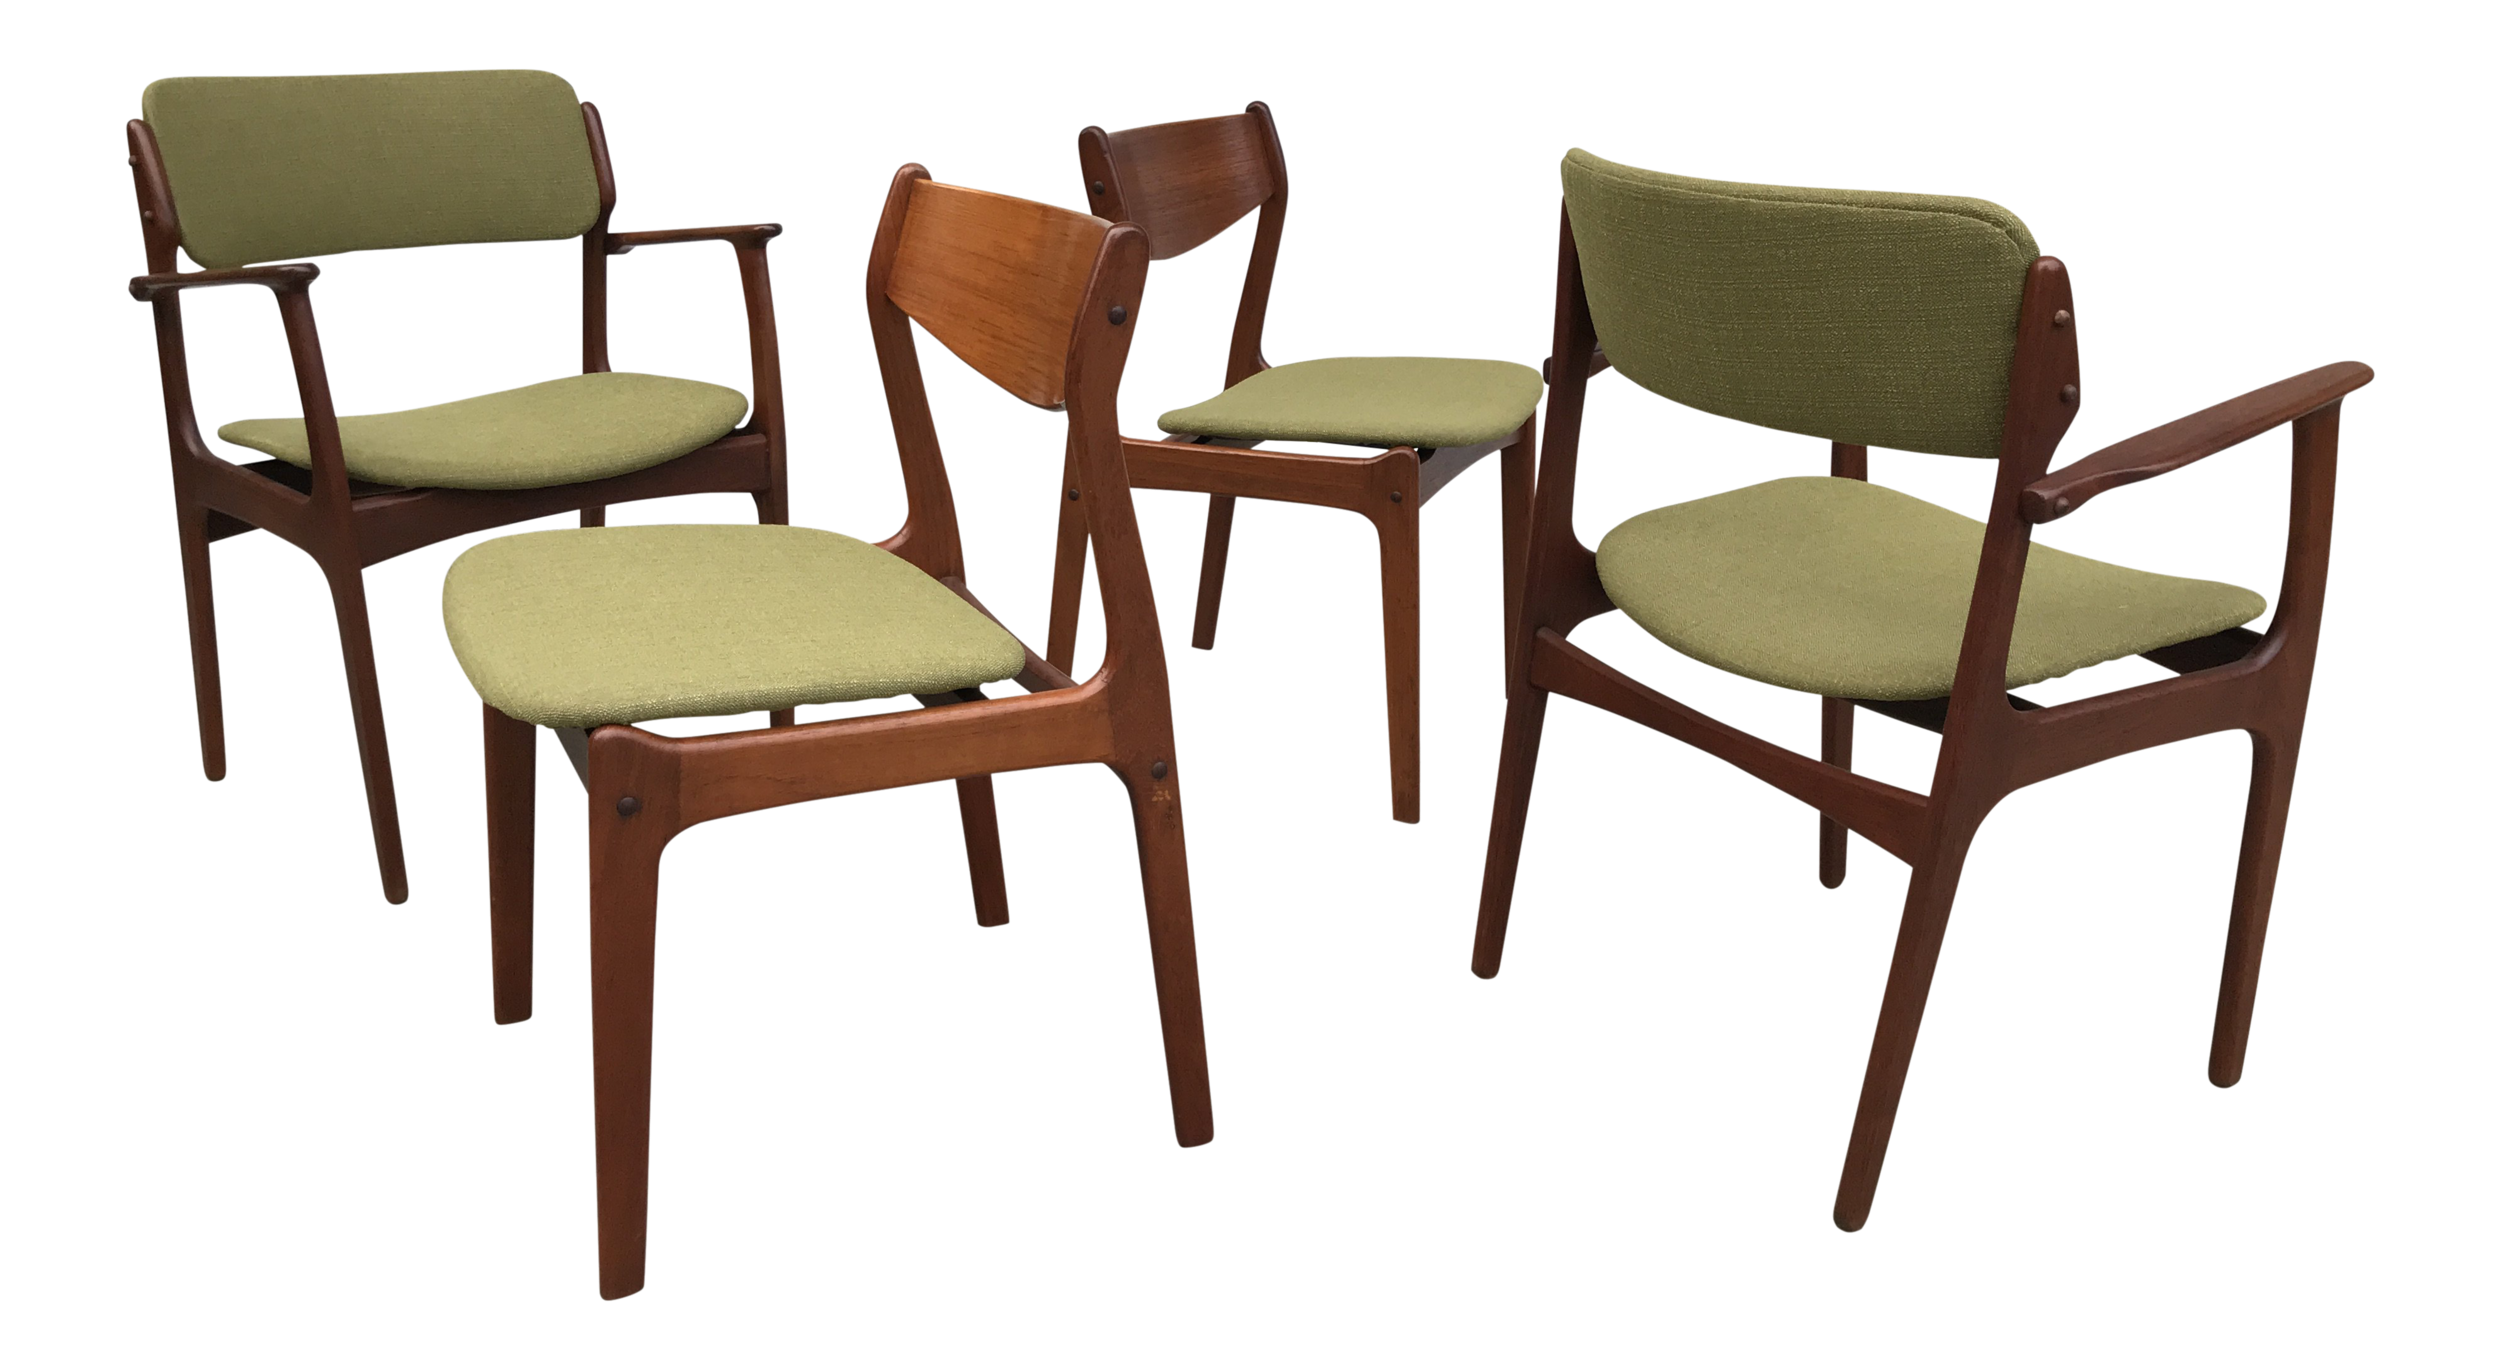 1950s-danish-modern-green-upholstred-teak-dining-chairs-set-of-4-6400.png